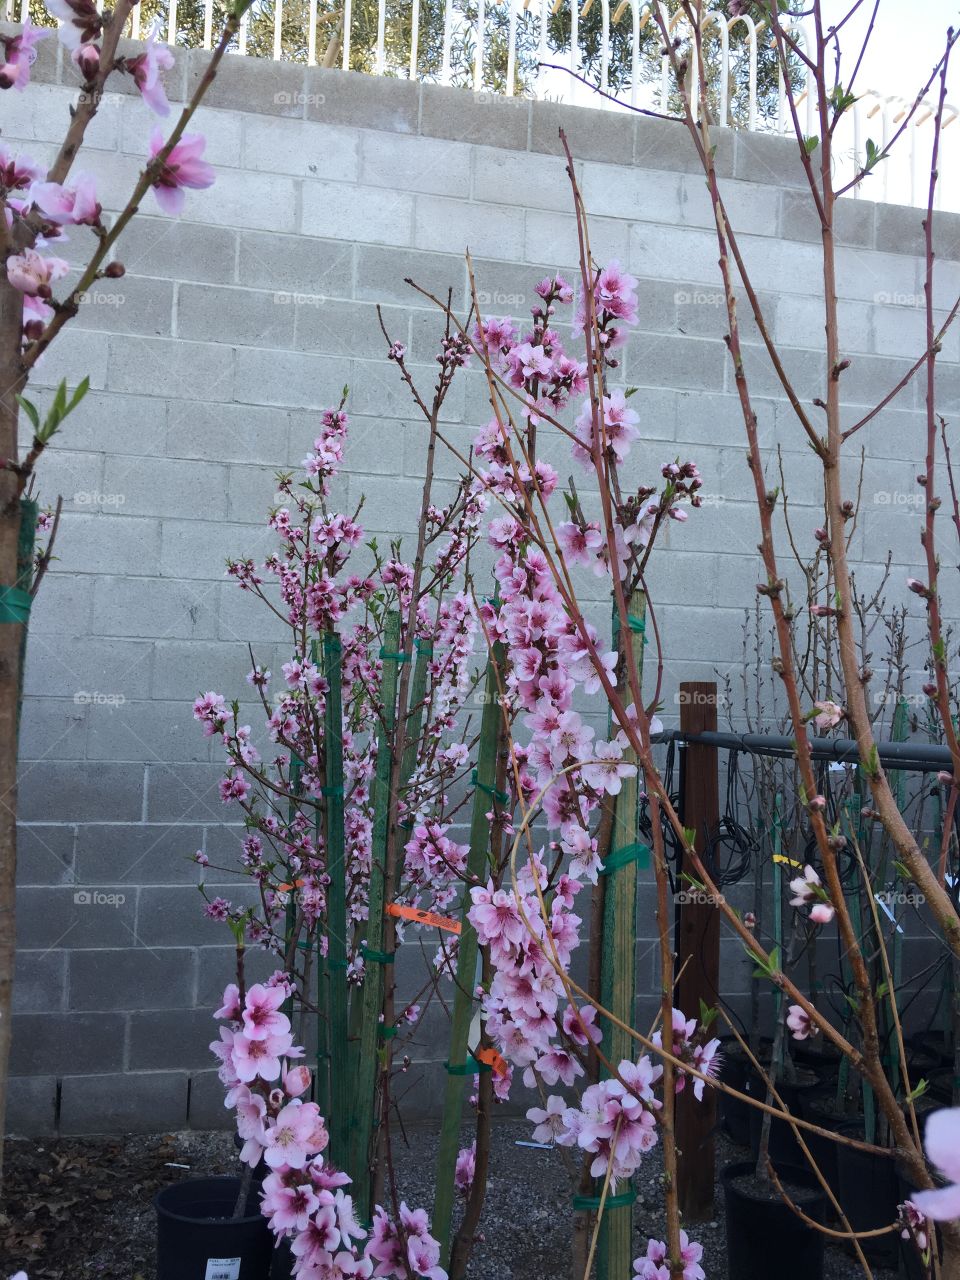 Bloom
Blossom
Spring